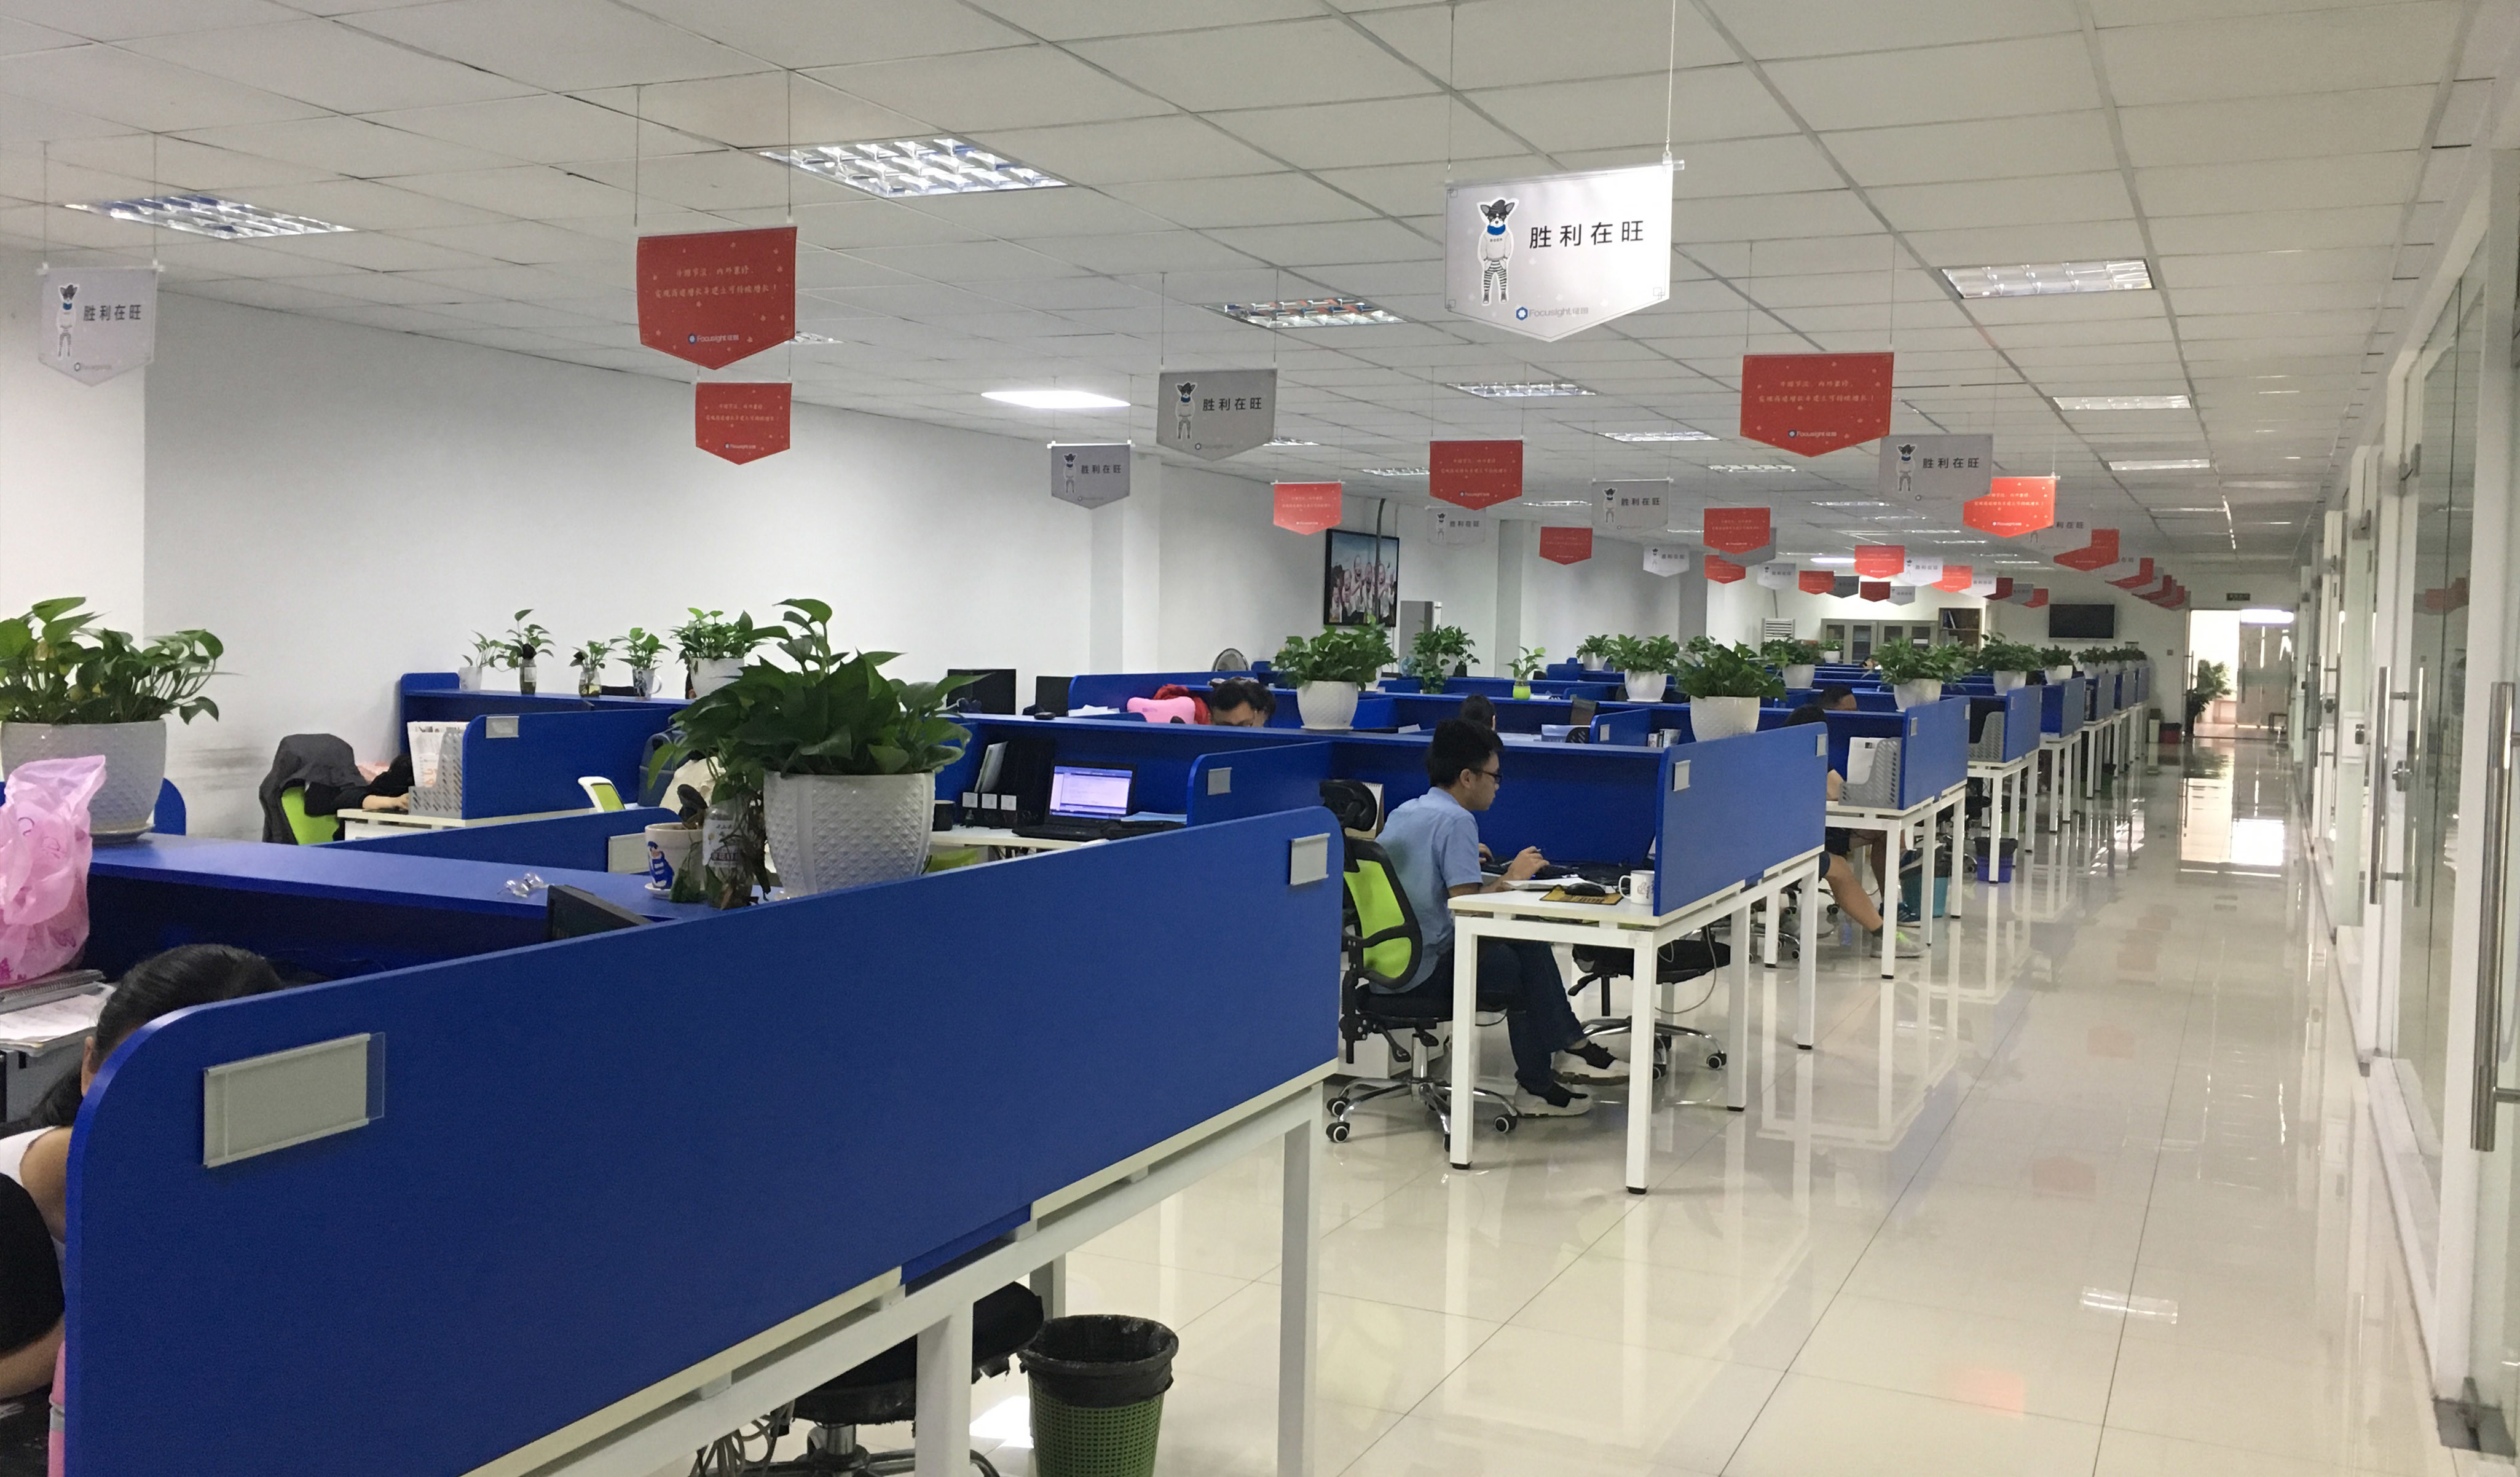 Çin Focusight Technology Co.,Ltd şirket Profili